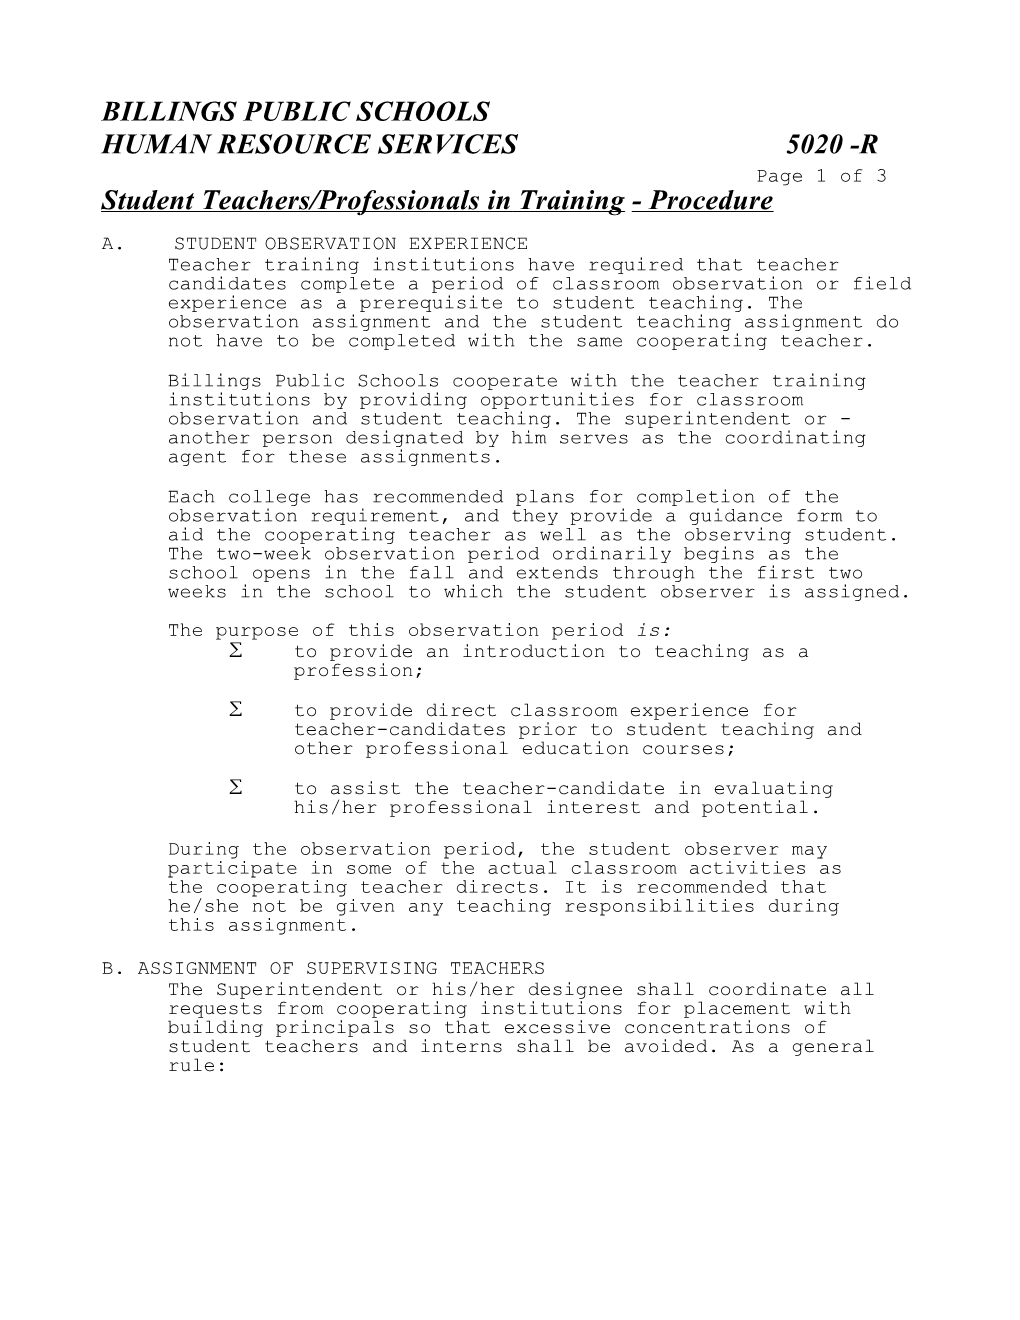 Student Teachers/Professionals Intraining- Procedure